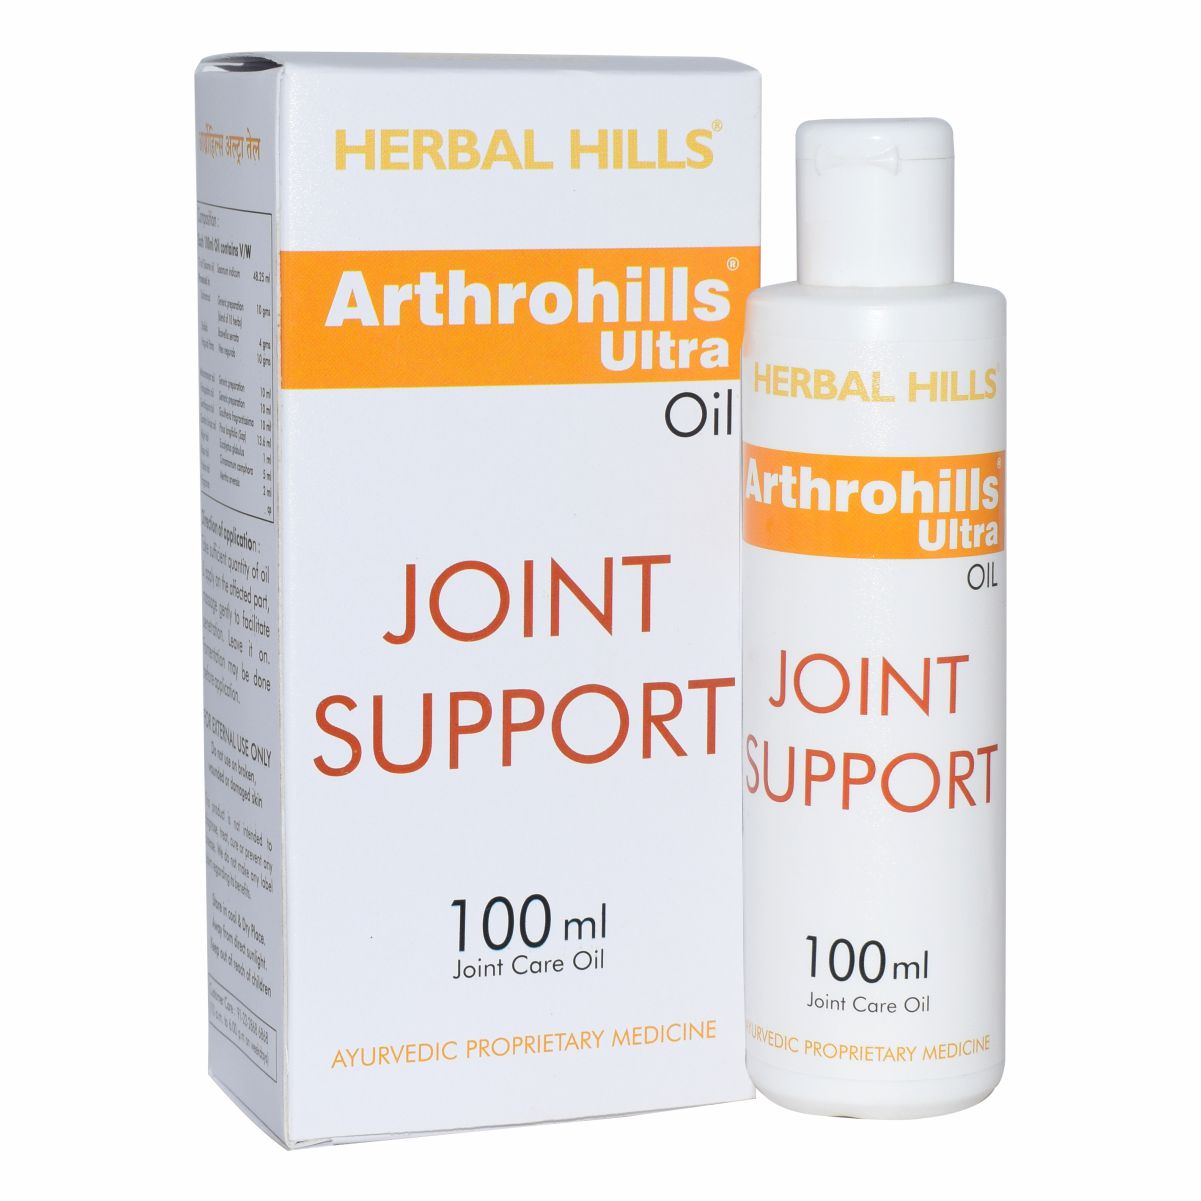 Herbal Hills Arthrohills Joint Care Oil